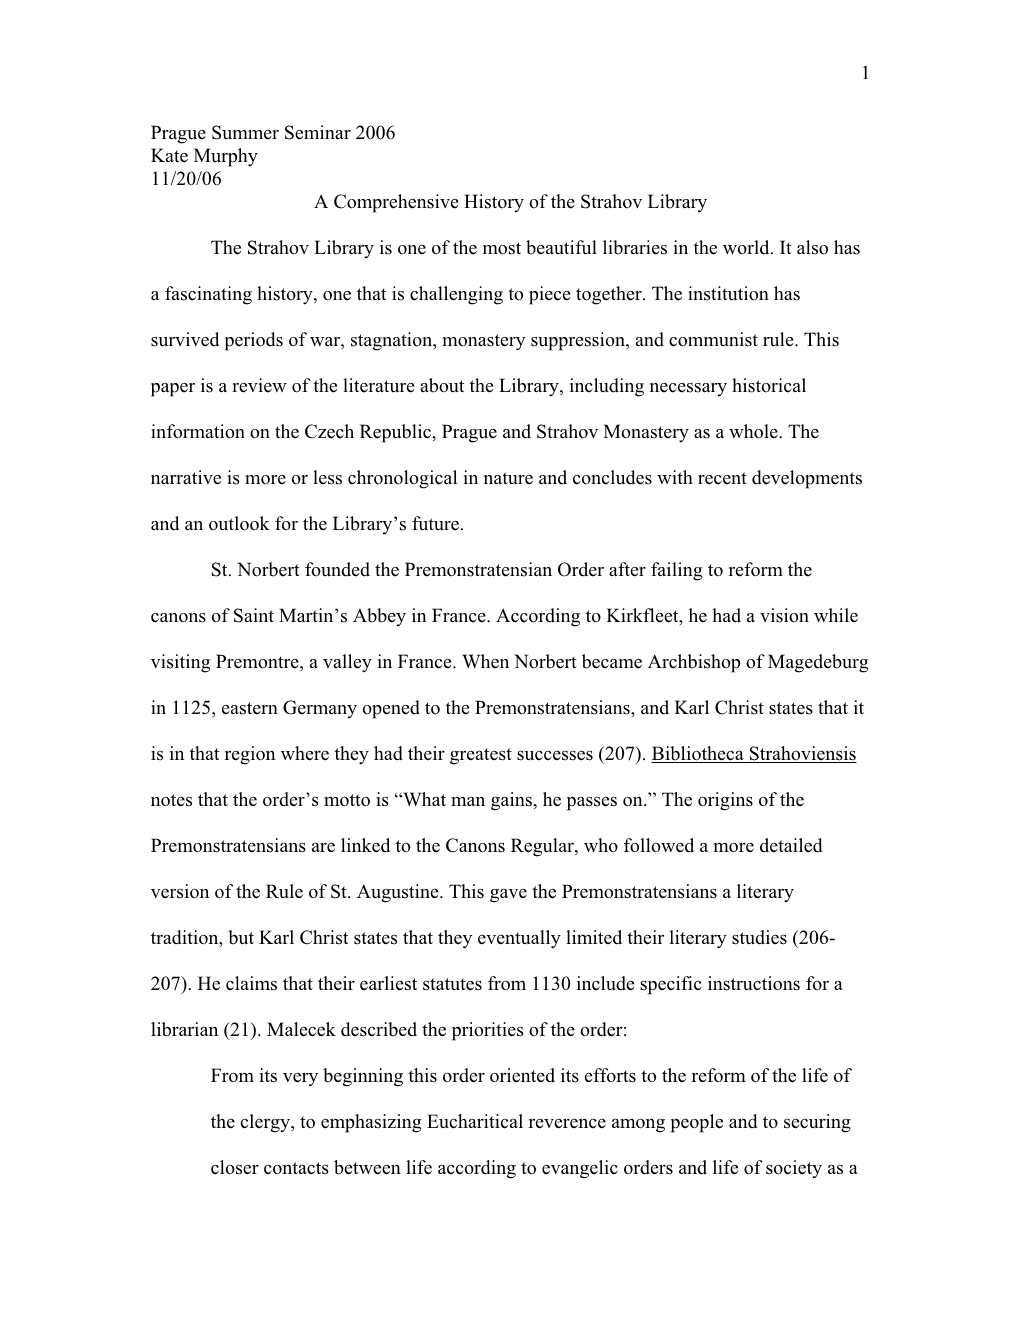 A Comprehensive History of the Strahov Library